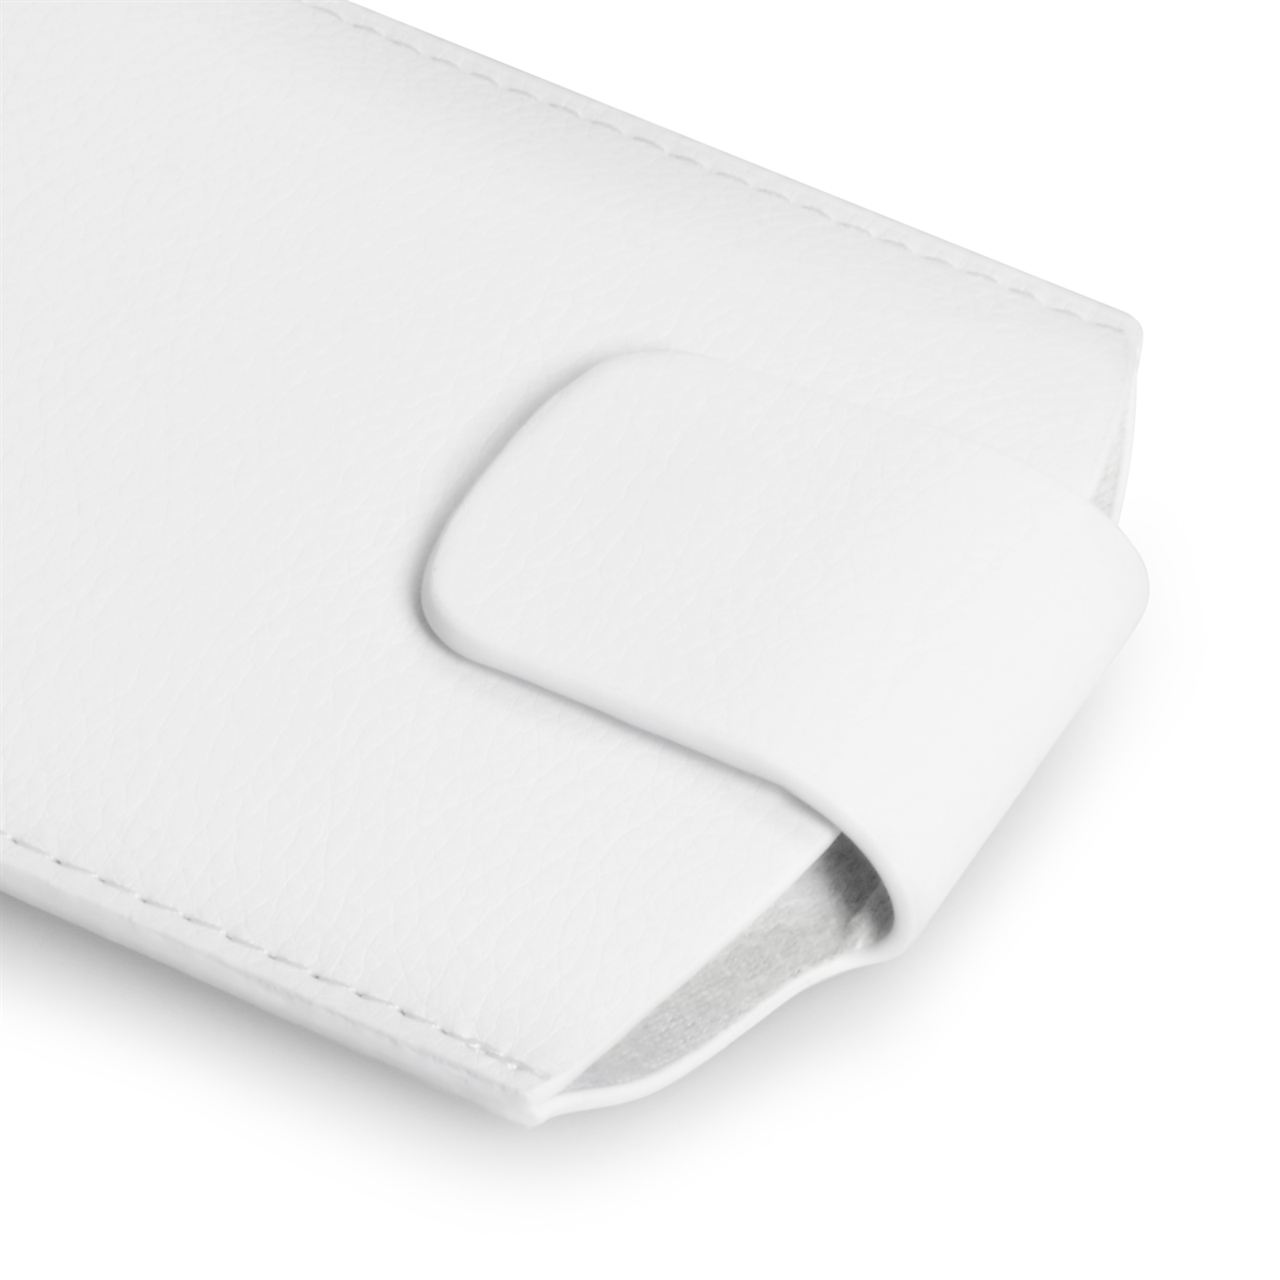 Caseflex Medium Textured Faux Leather Phone Pouch - White